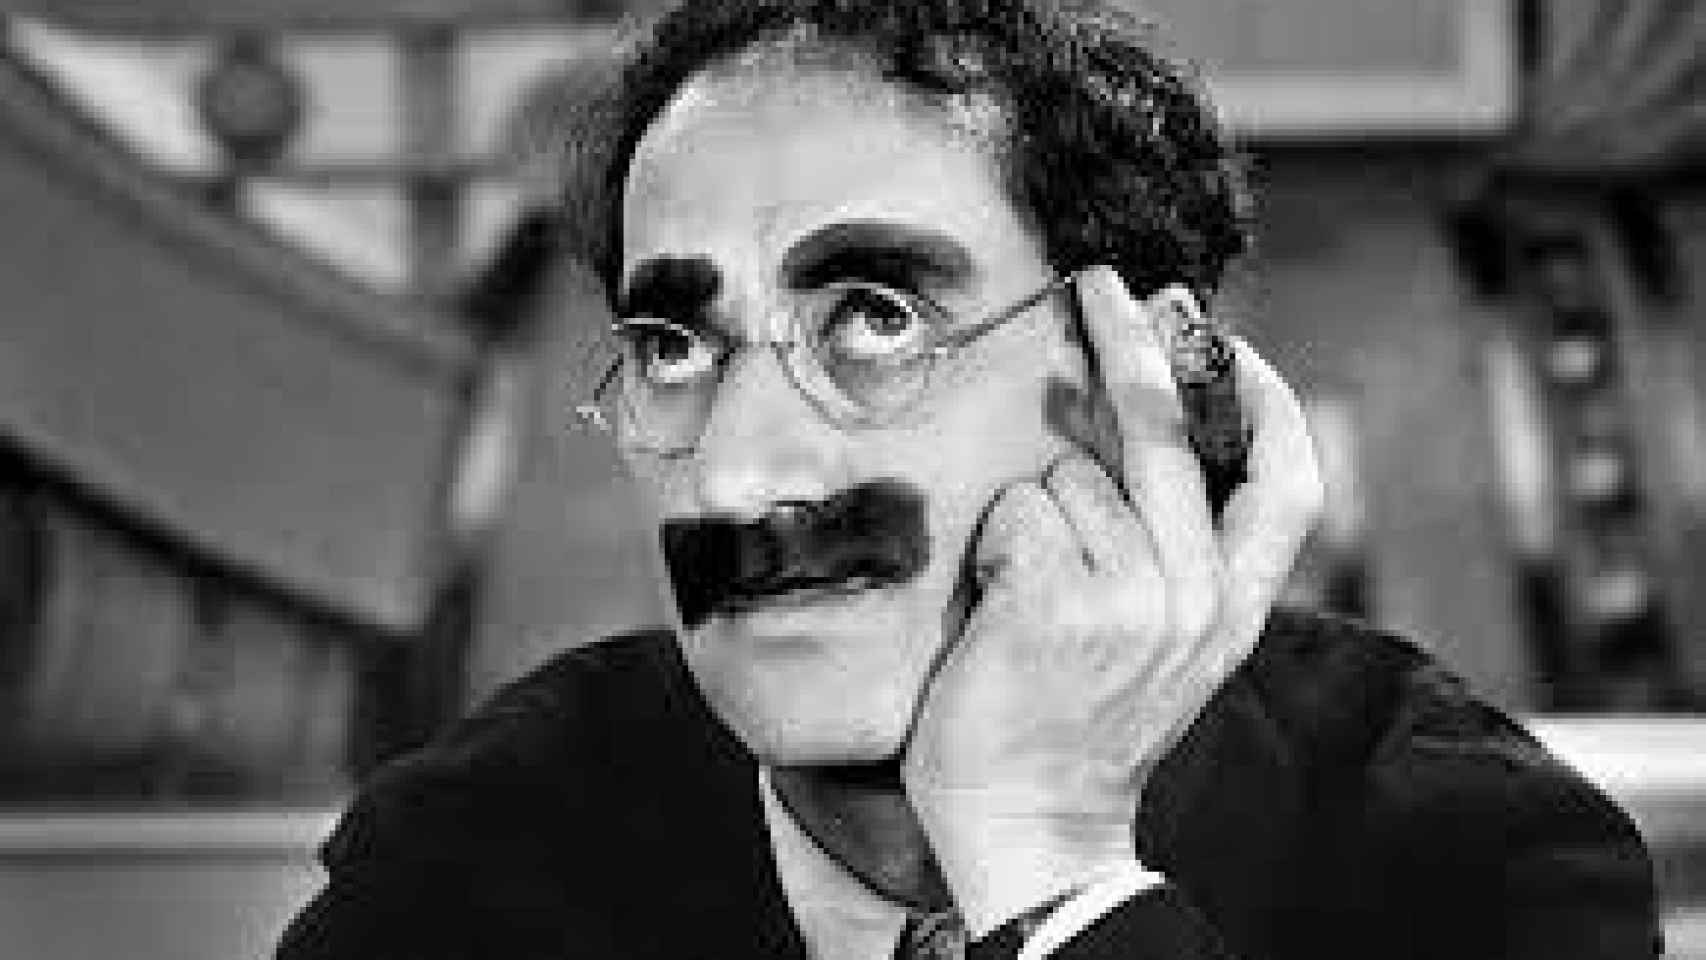 Groucho Marx.